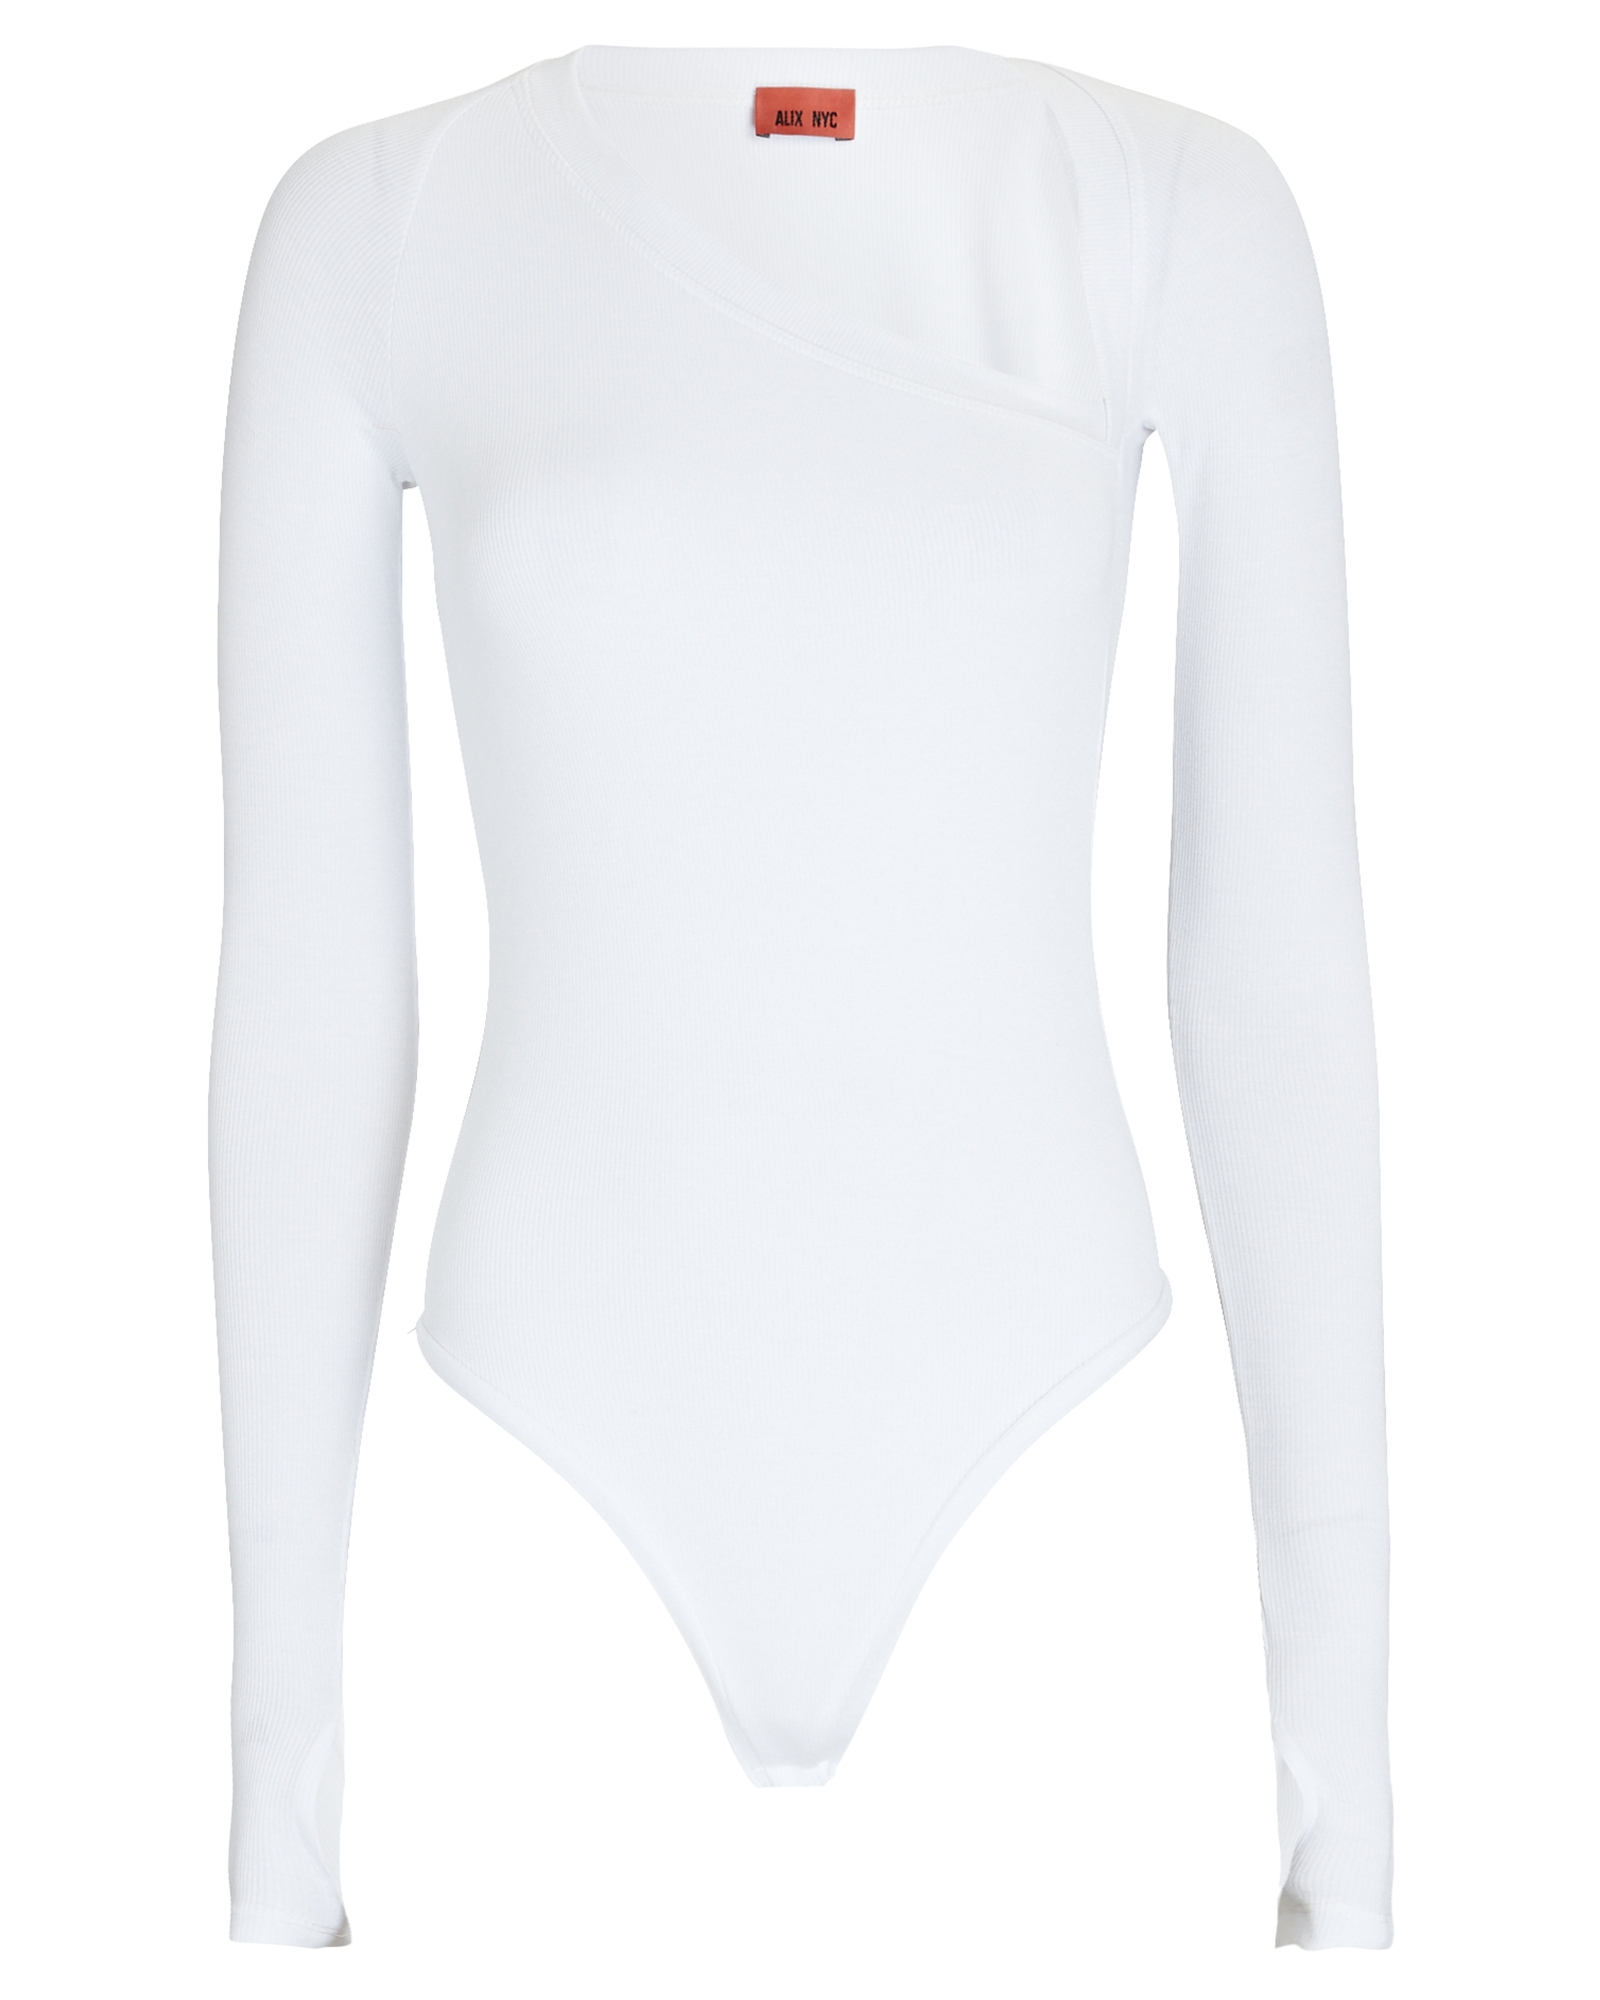 ALIX NYC Stratton Asymmetrical Bodysuit | INTERMIX®